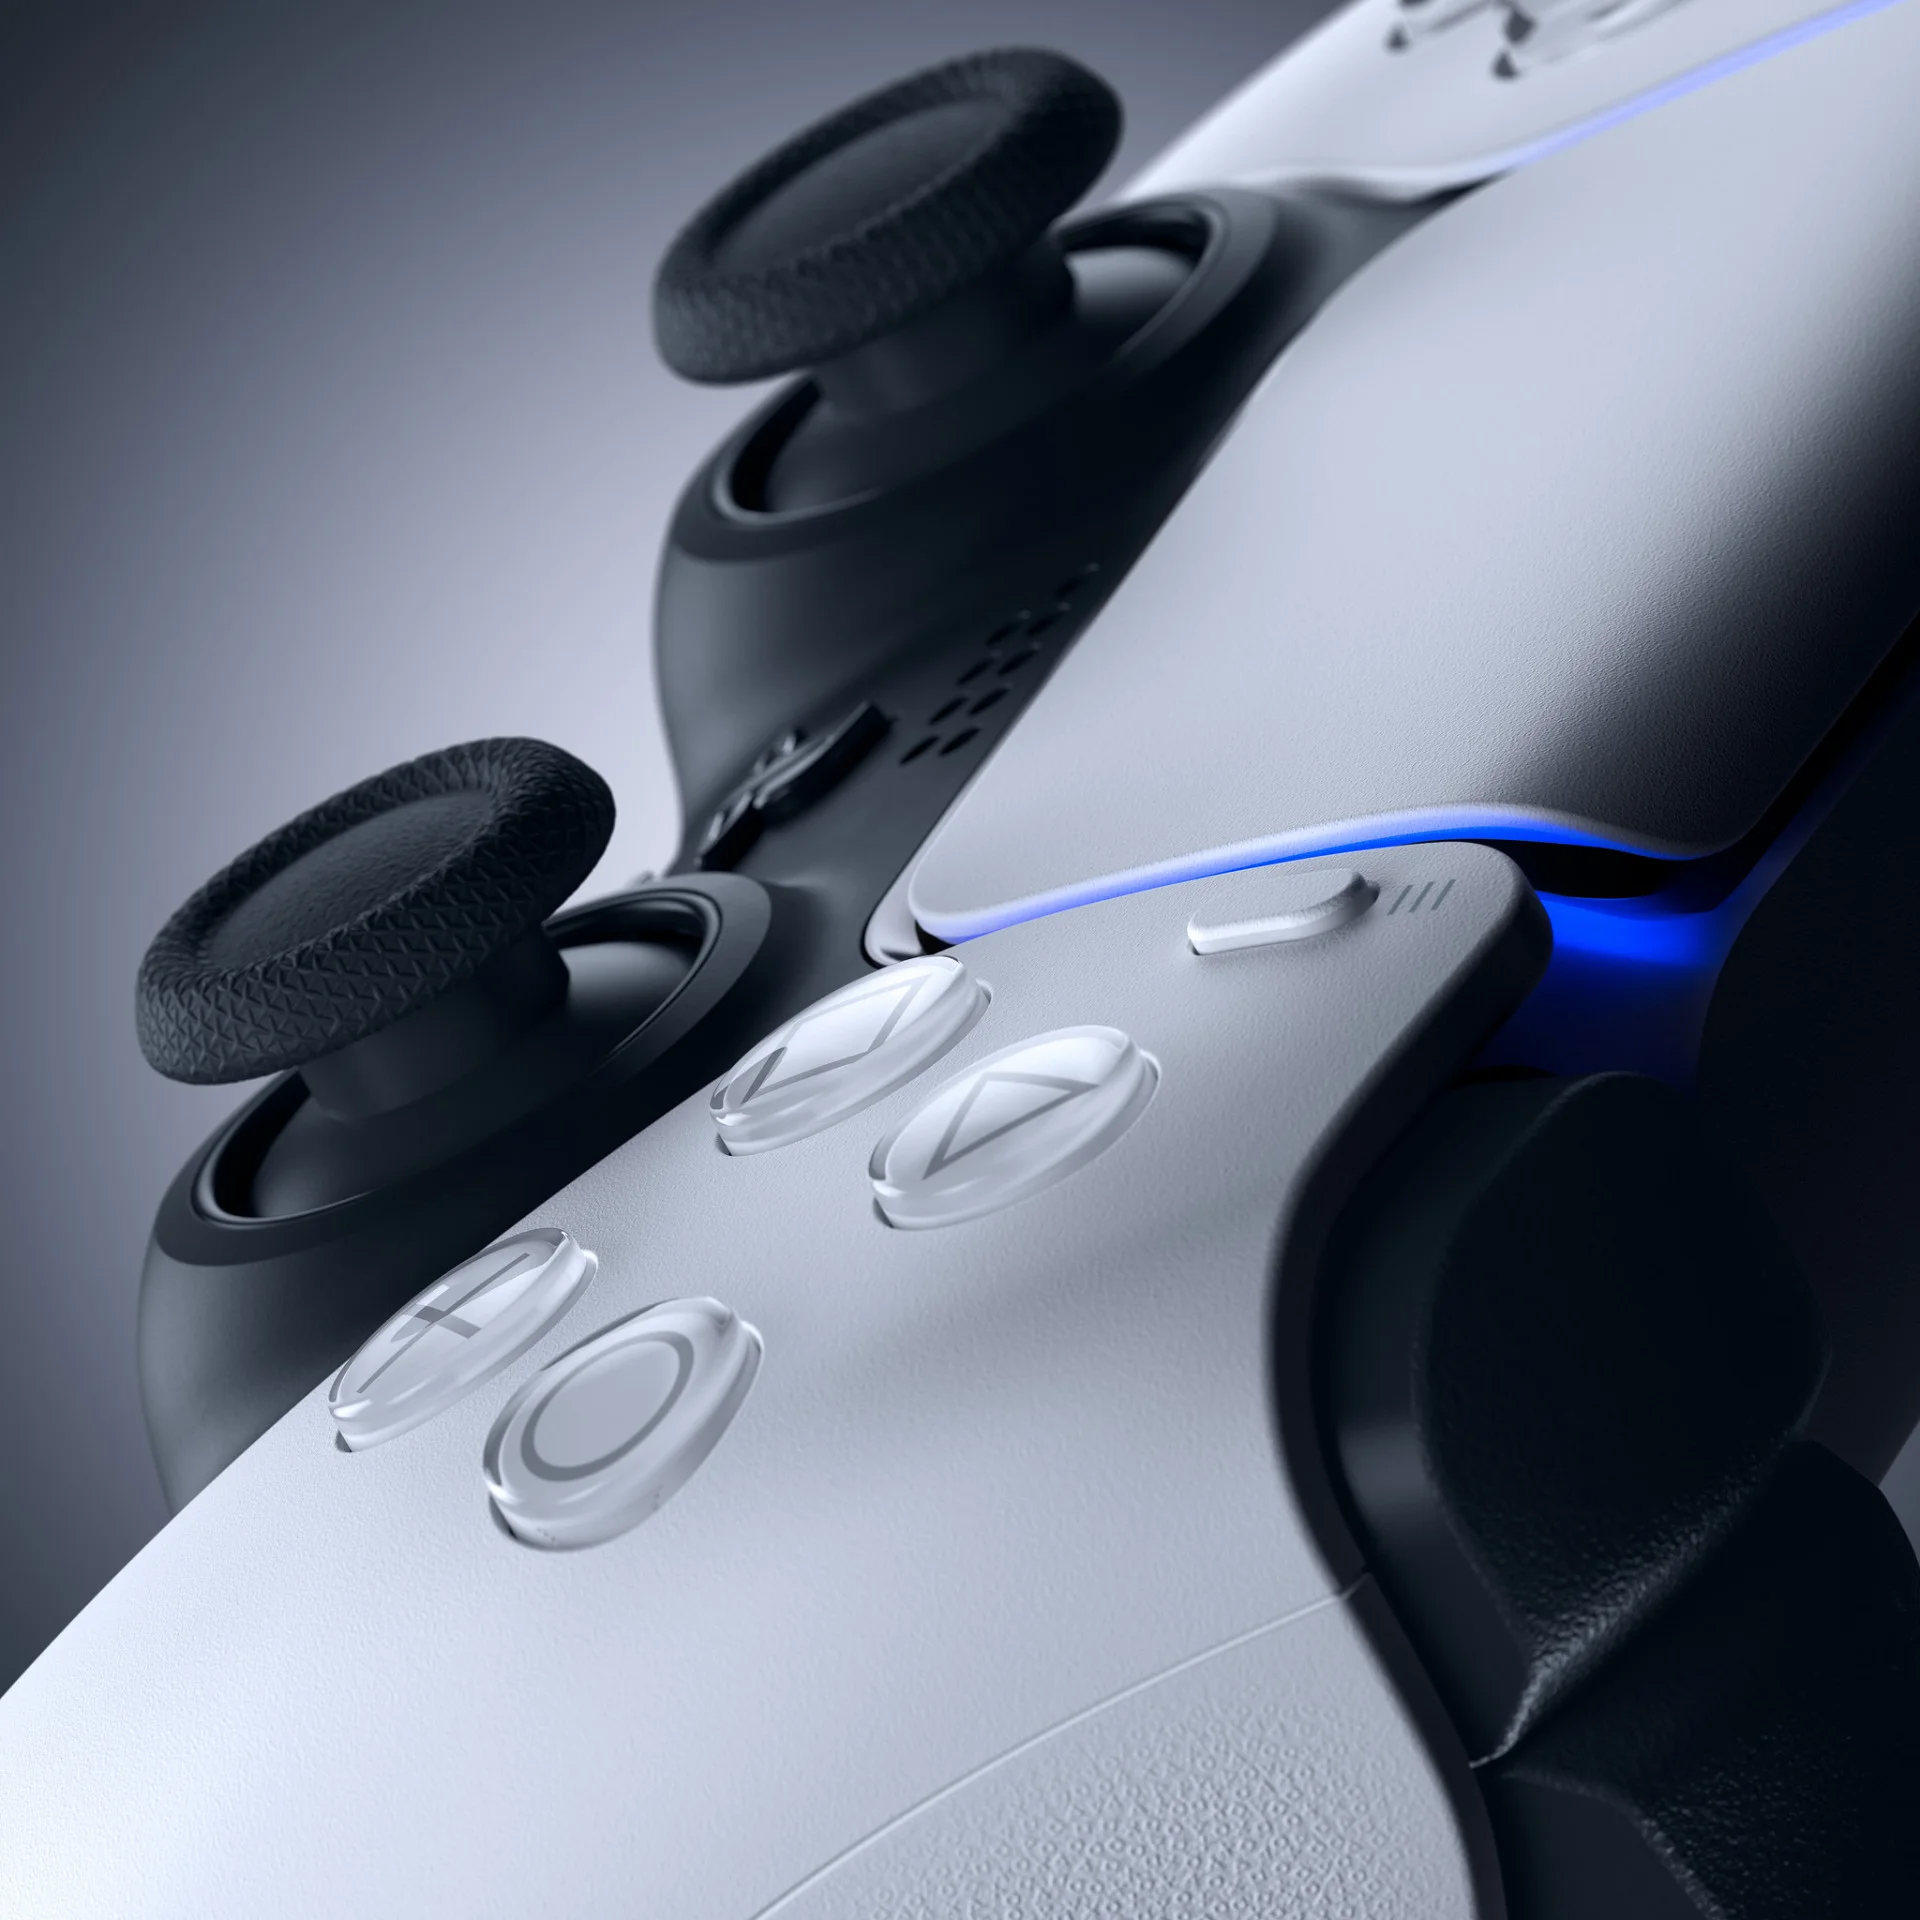 Sony выпустила 28 HQ-фото PlayStation 5 и её аксессуаров - фото 11